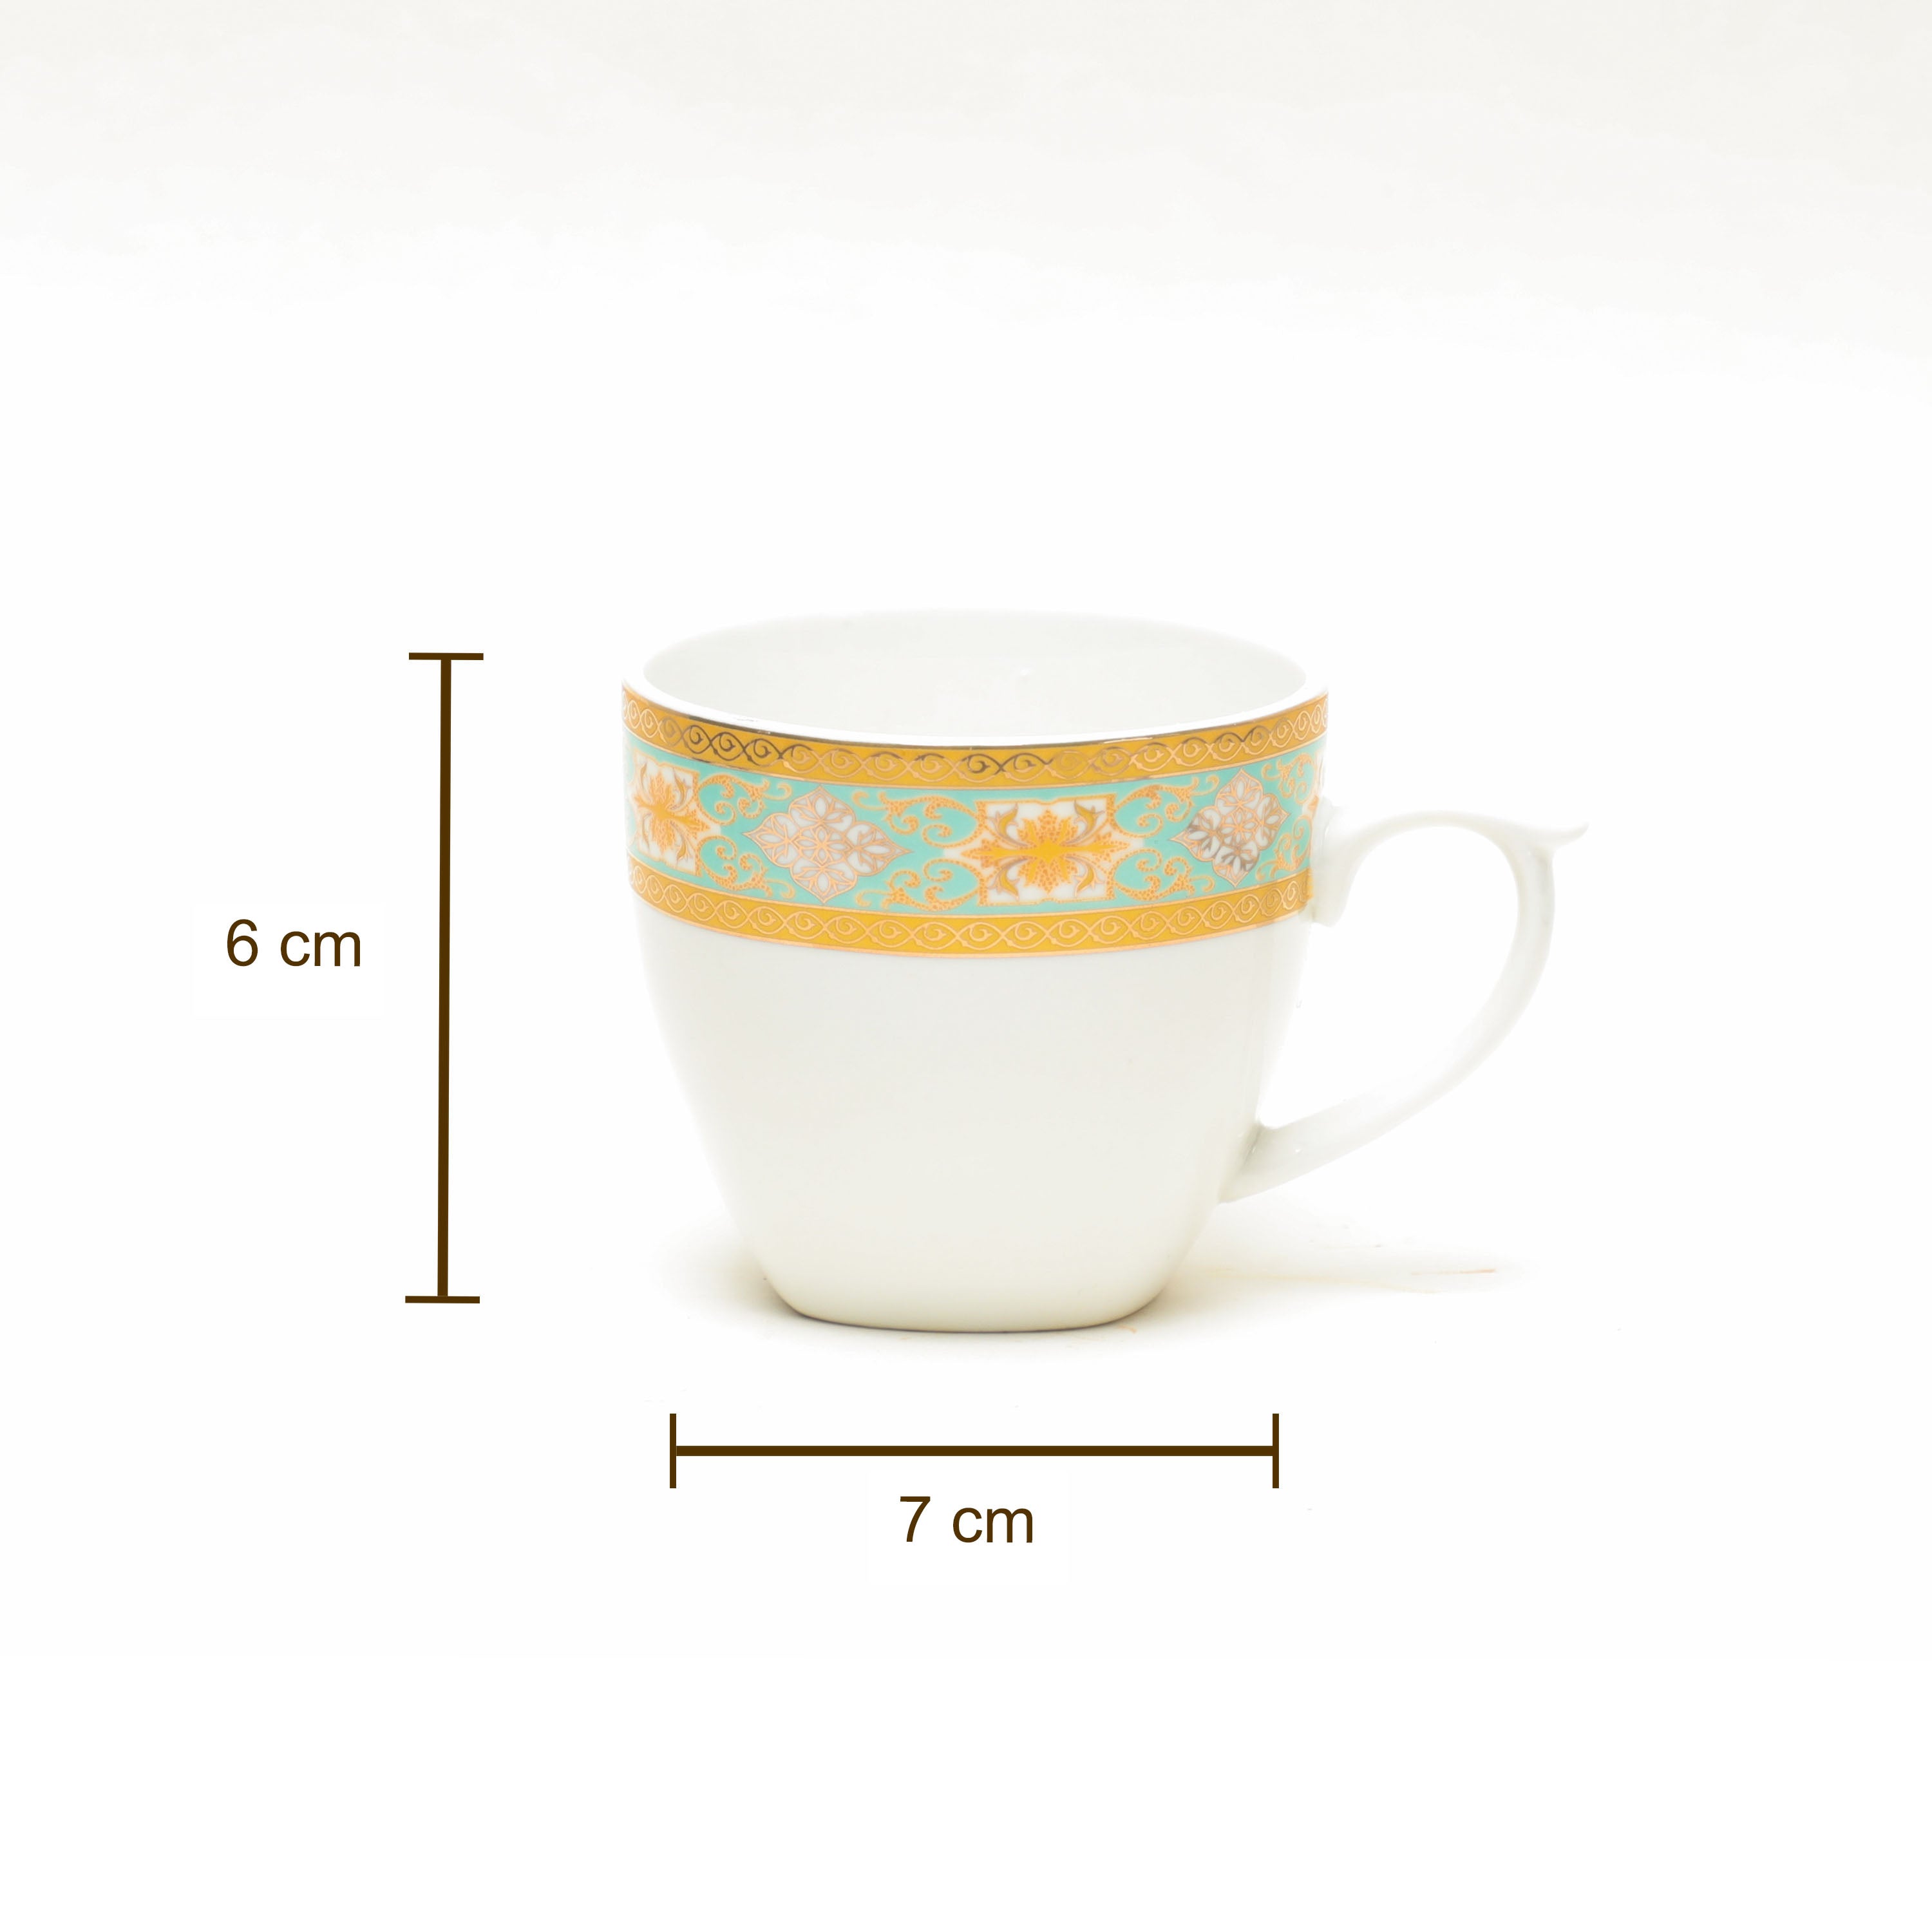 White Ceramic Tea Cups for sale in the USA